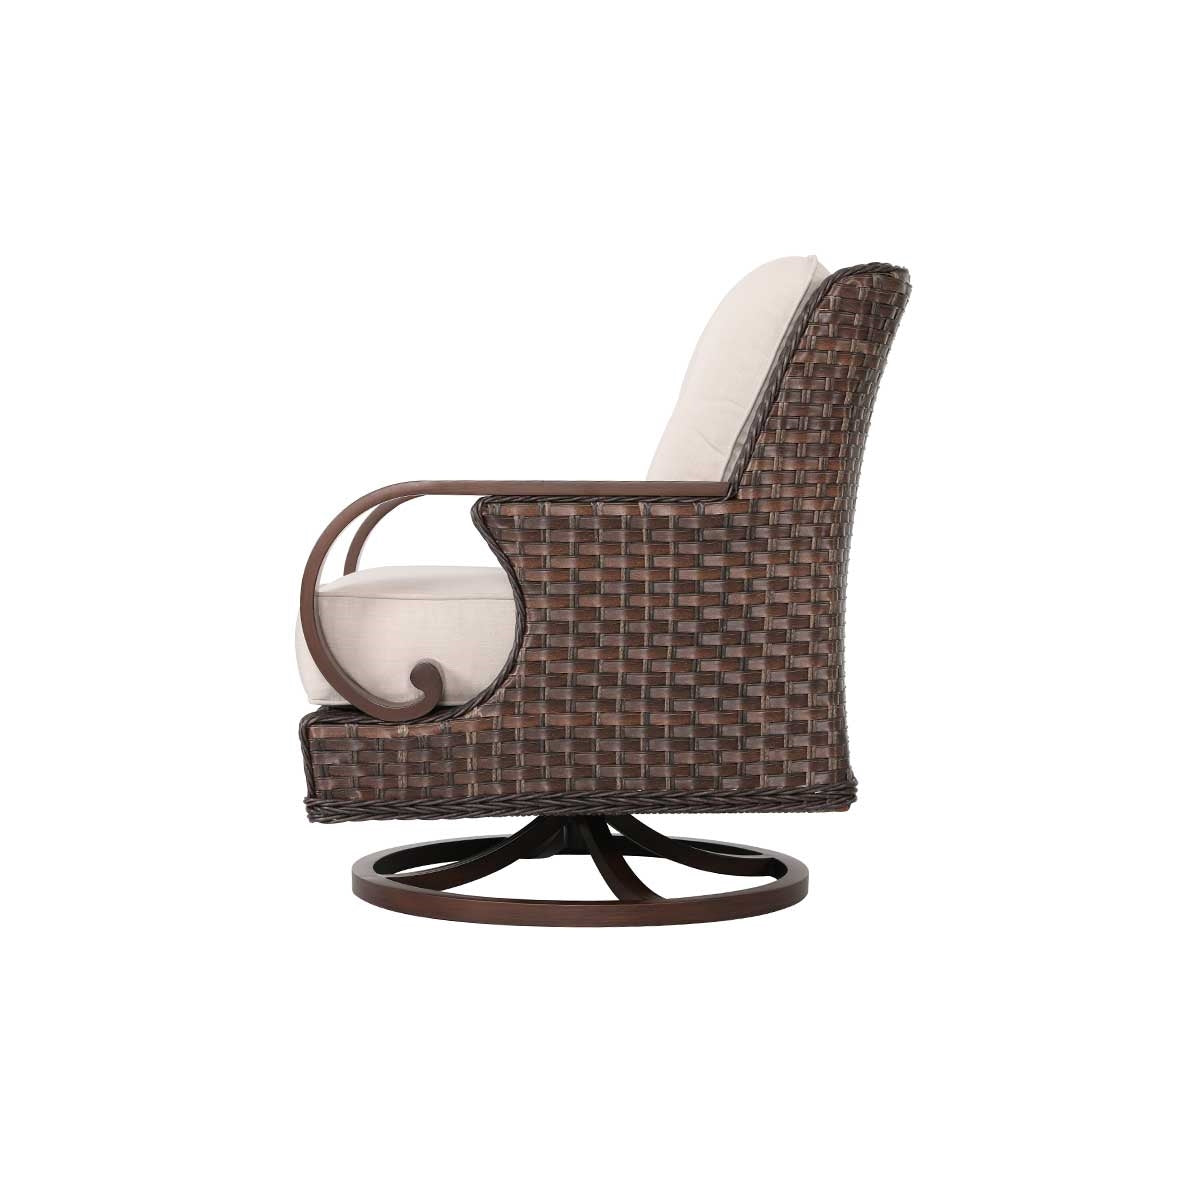 Patio Time Brooks 4-Piece Wicker Sofa Set with Swivel Rocking Chairs